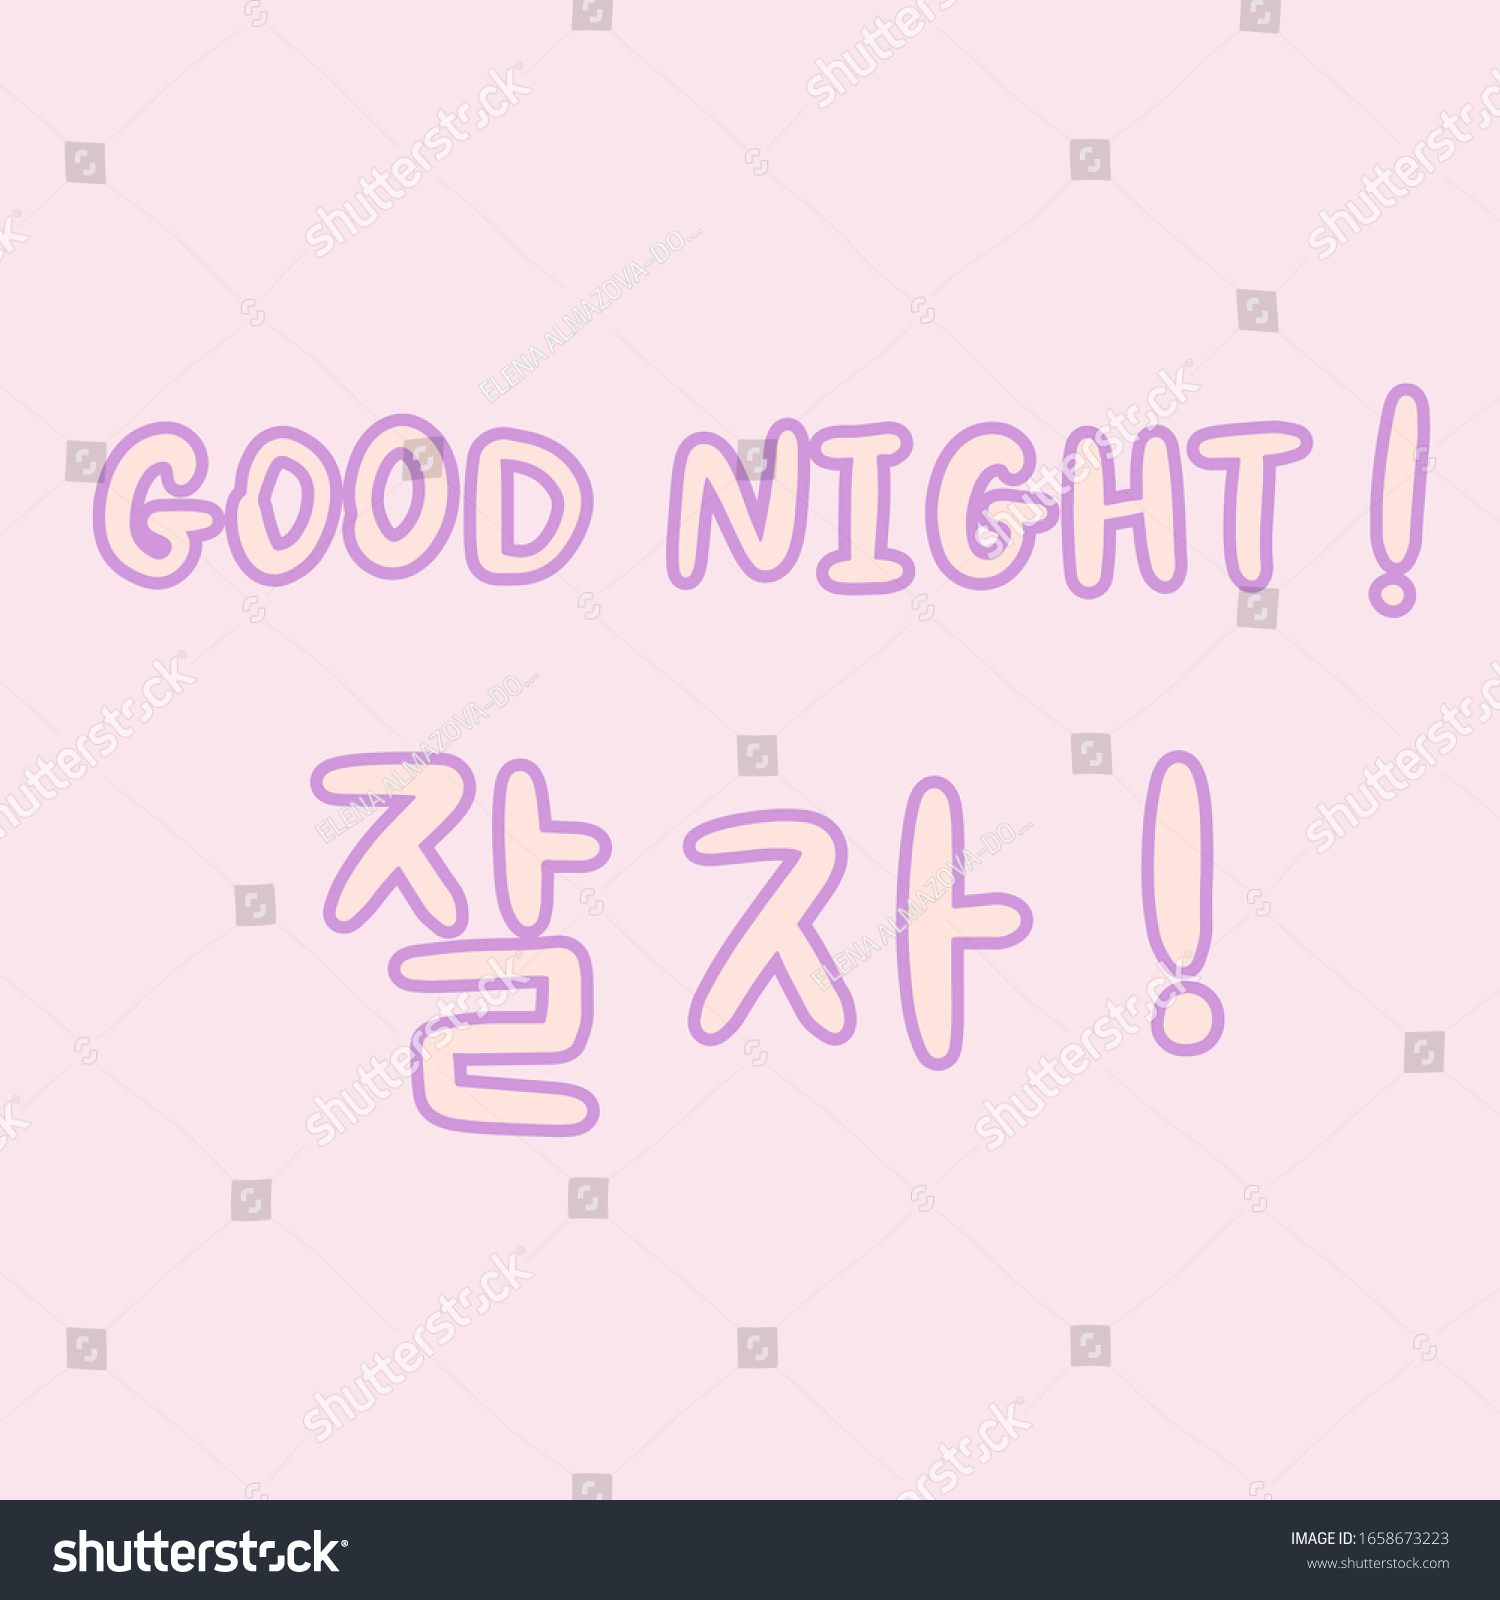 Korean language night in good รวมวิธีบอก “ฝันดีนะ”